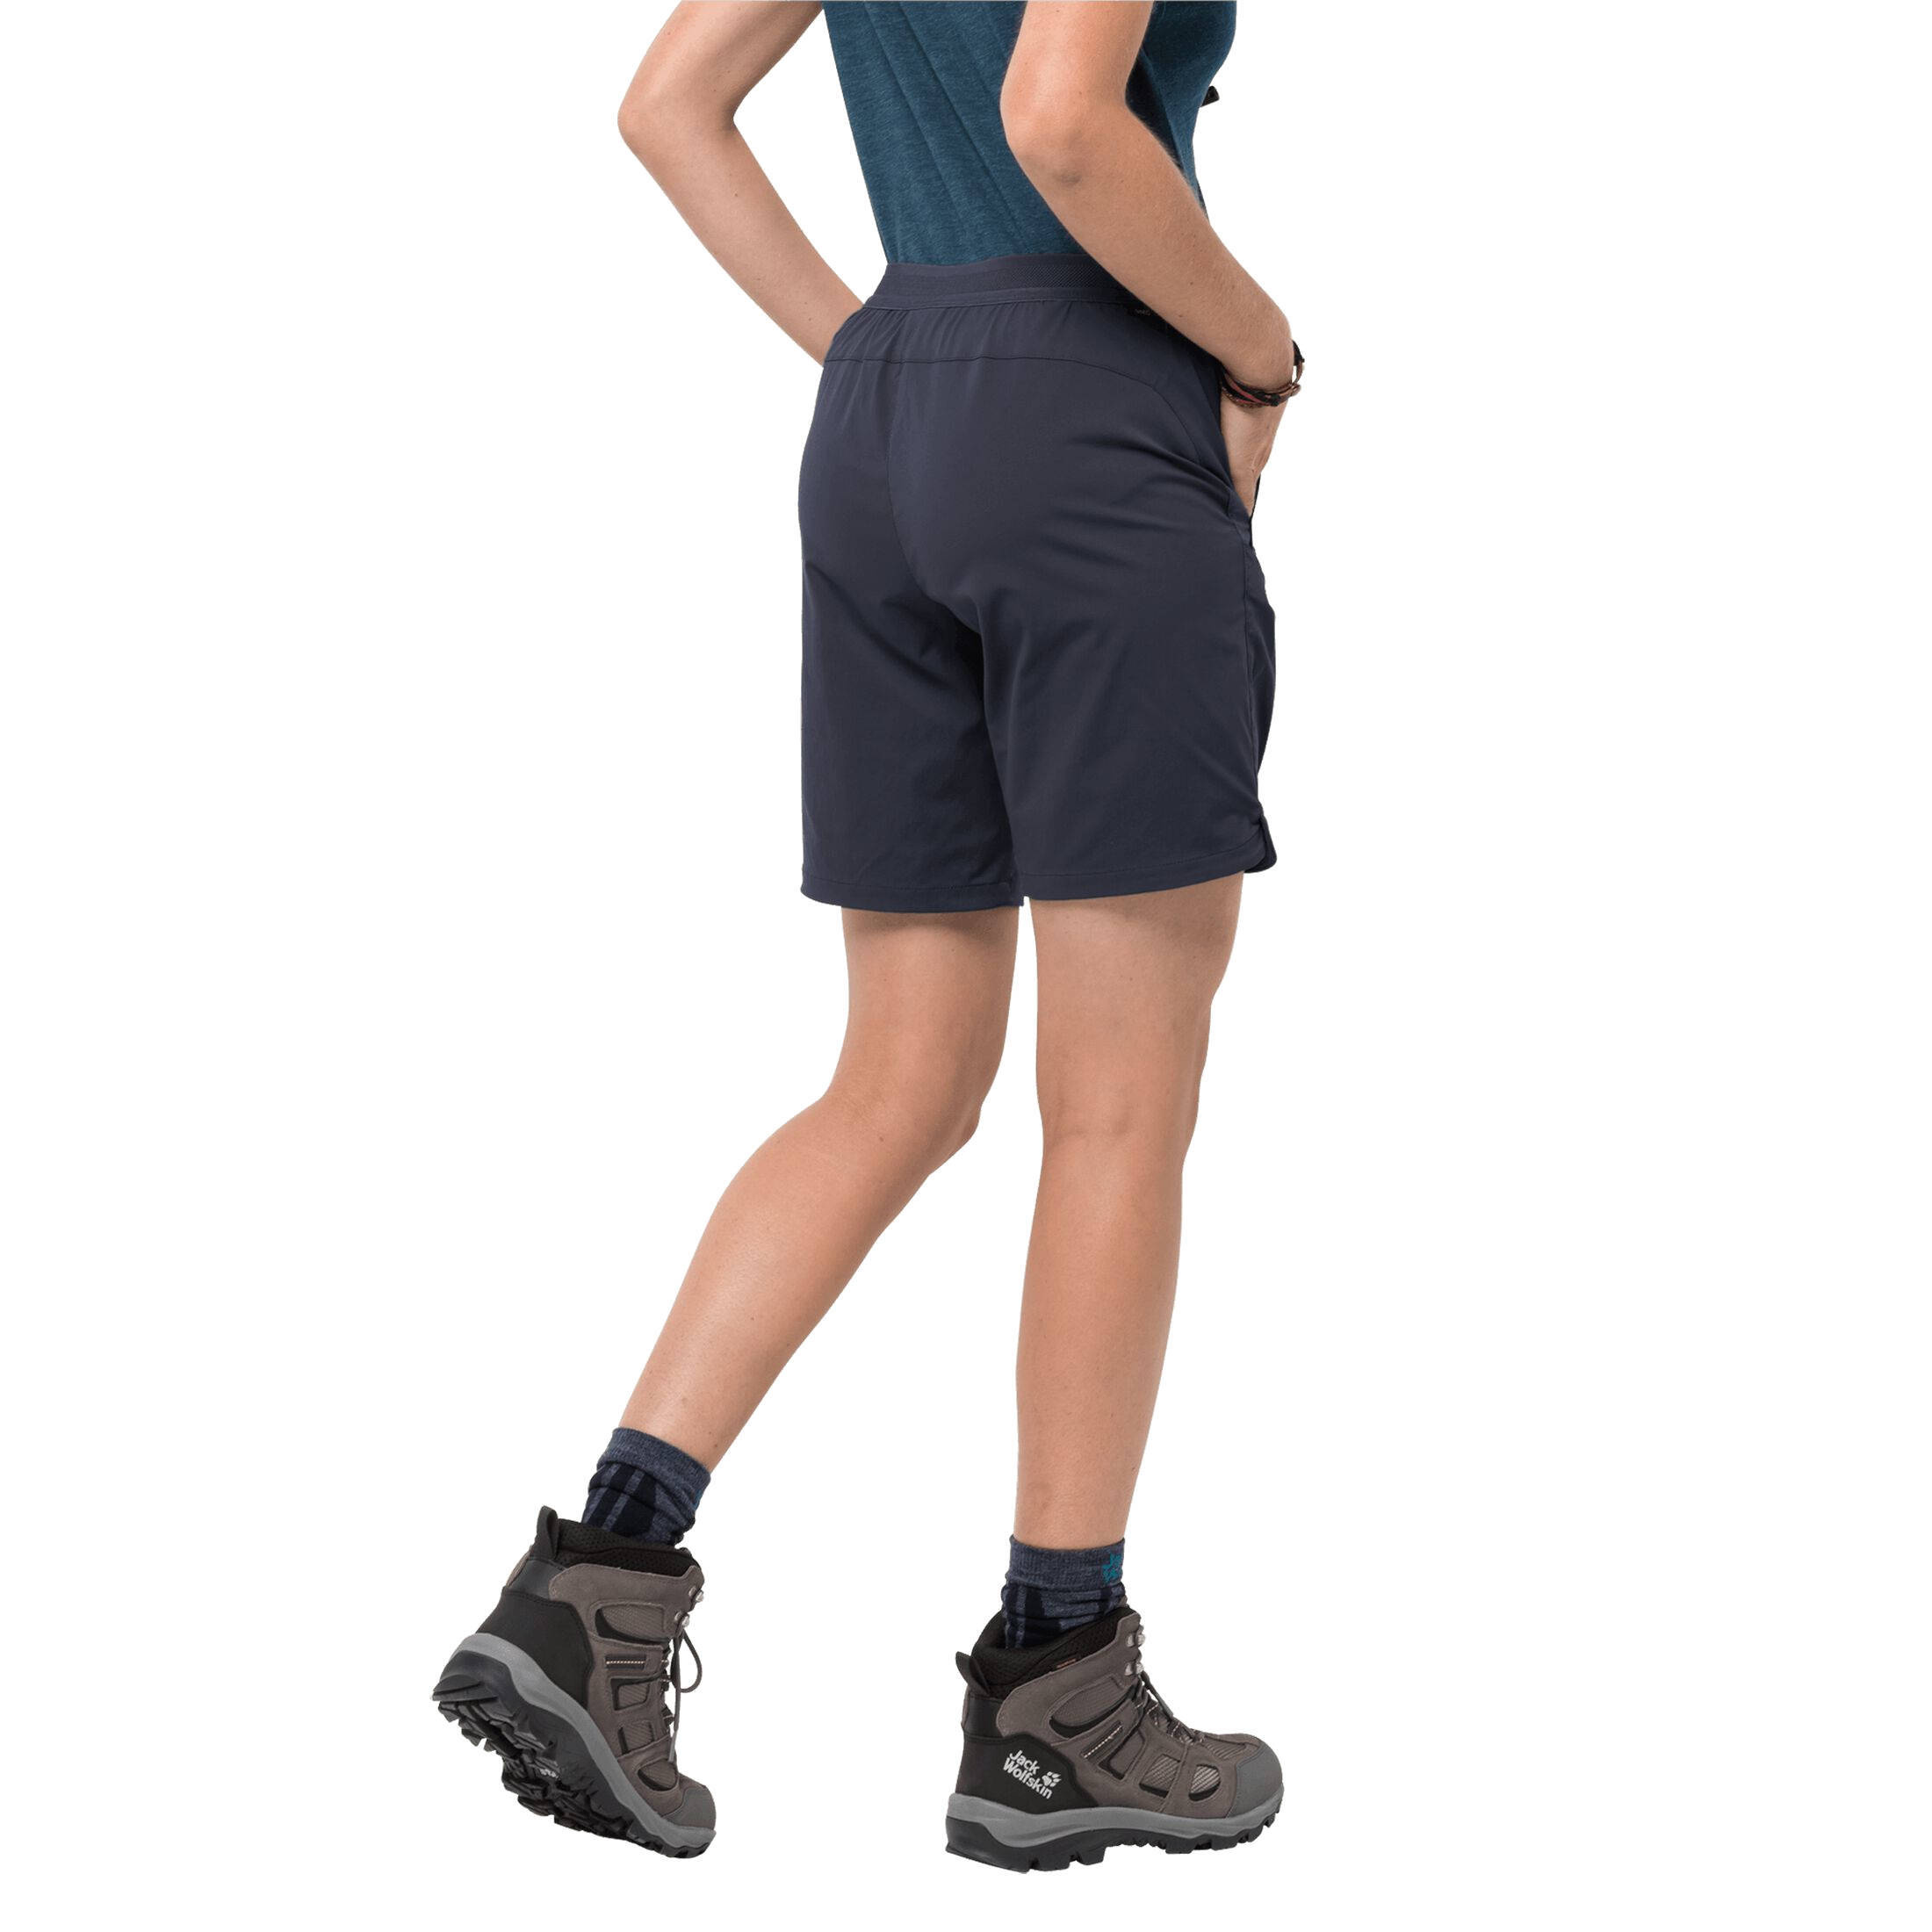 Spodnie HILLTOP TRAIL SHORTS WOMEN graphite | odzież \ damska \ spodnie \  krótkie spodenki-spodnie 3/4